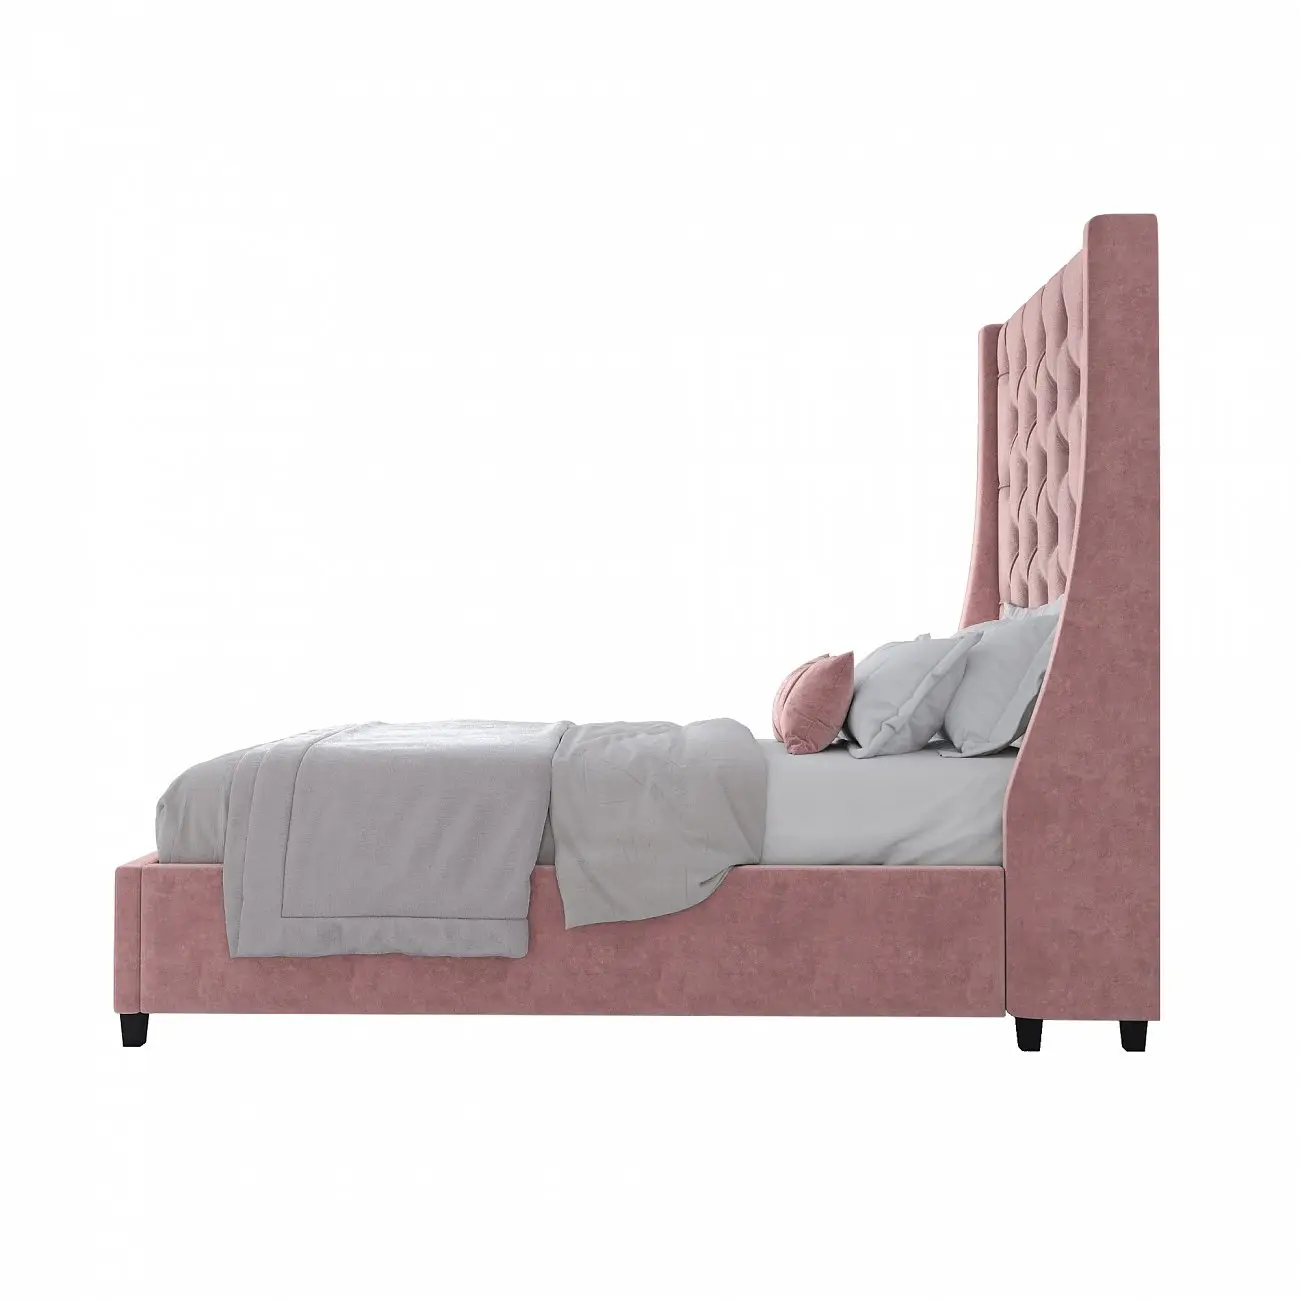 Single bed 90x200 Ada pink MR